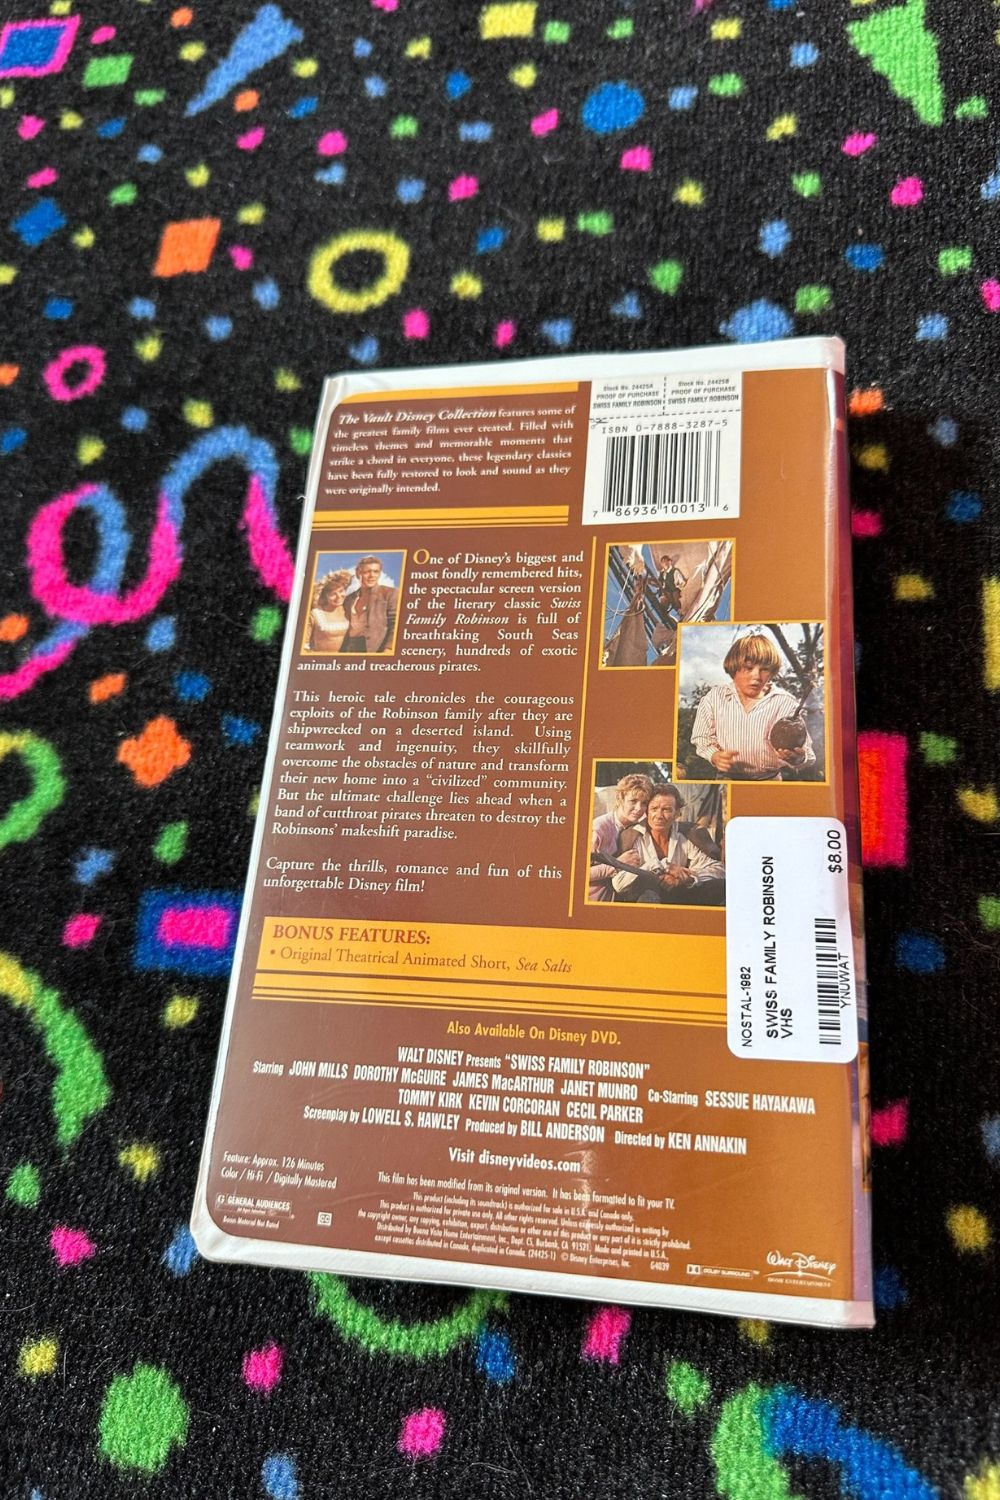 VAULT DISNEY COLLECTION SWISS FAMILY ROBINSON DVD*